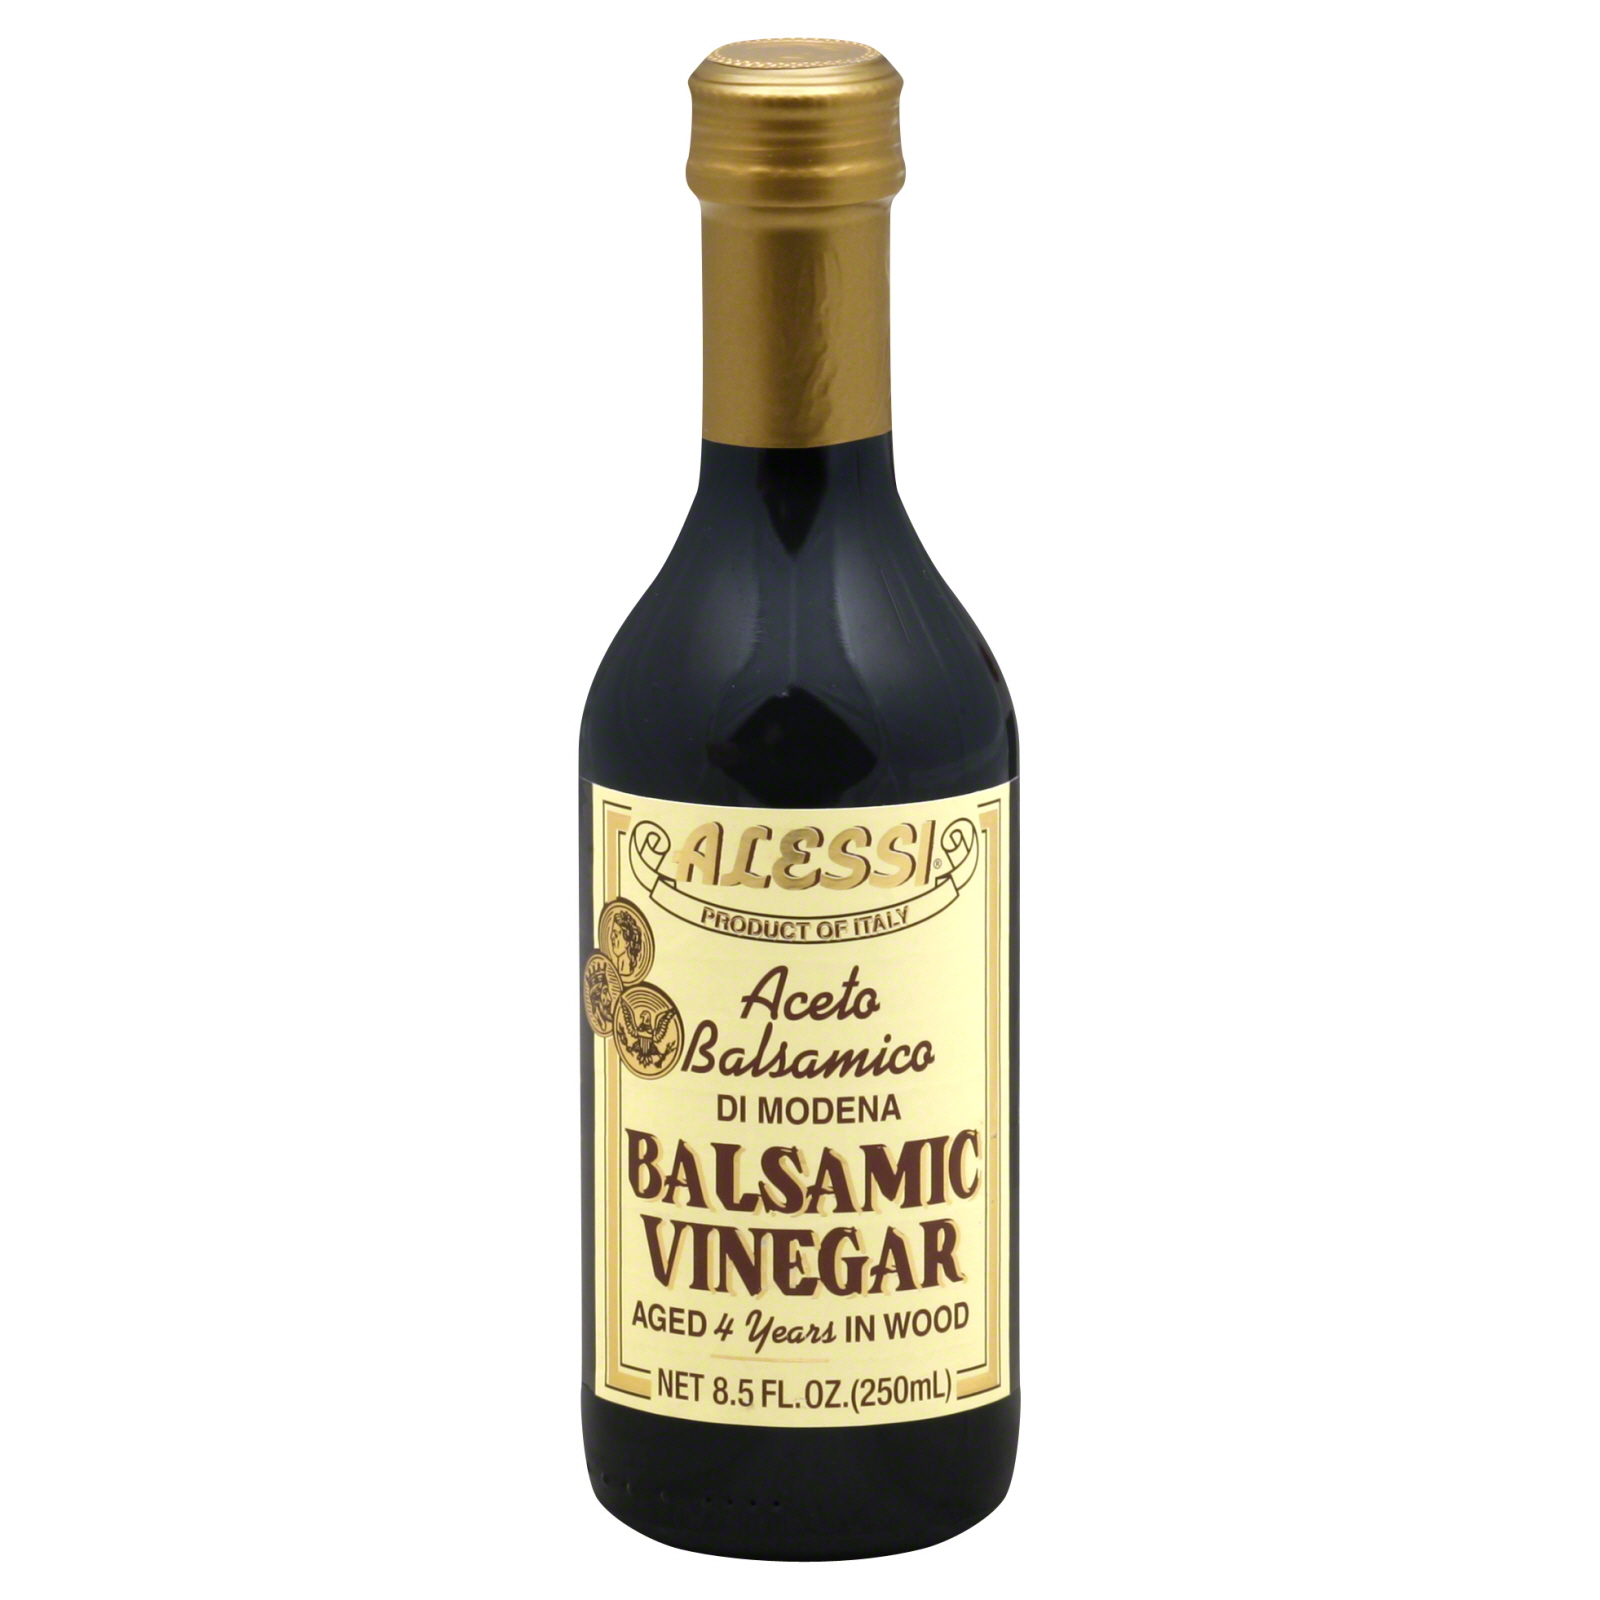 Alessi Balsamic Vinegar Aged 4 Years in Wood, 8.5 fl oz (250 ml)